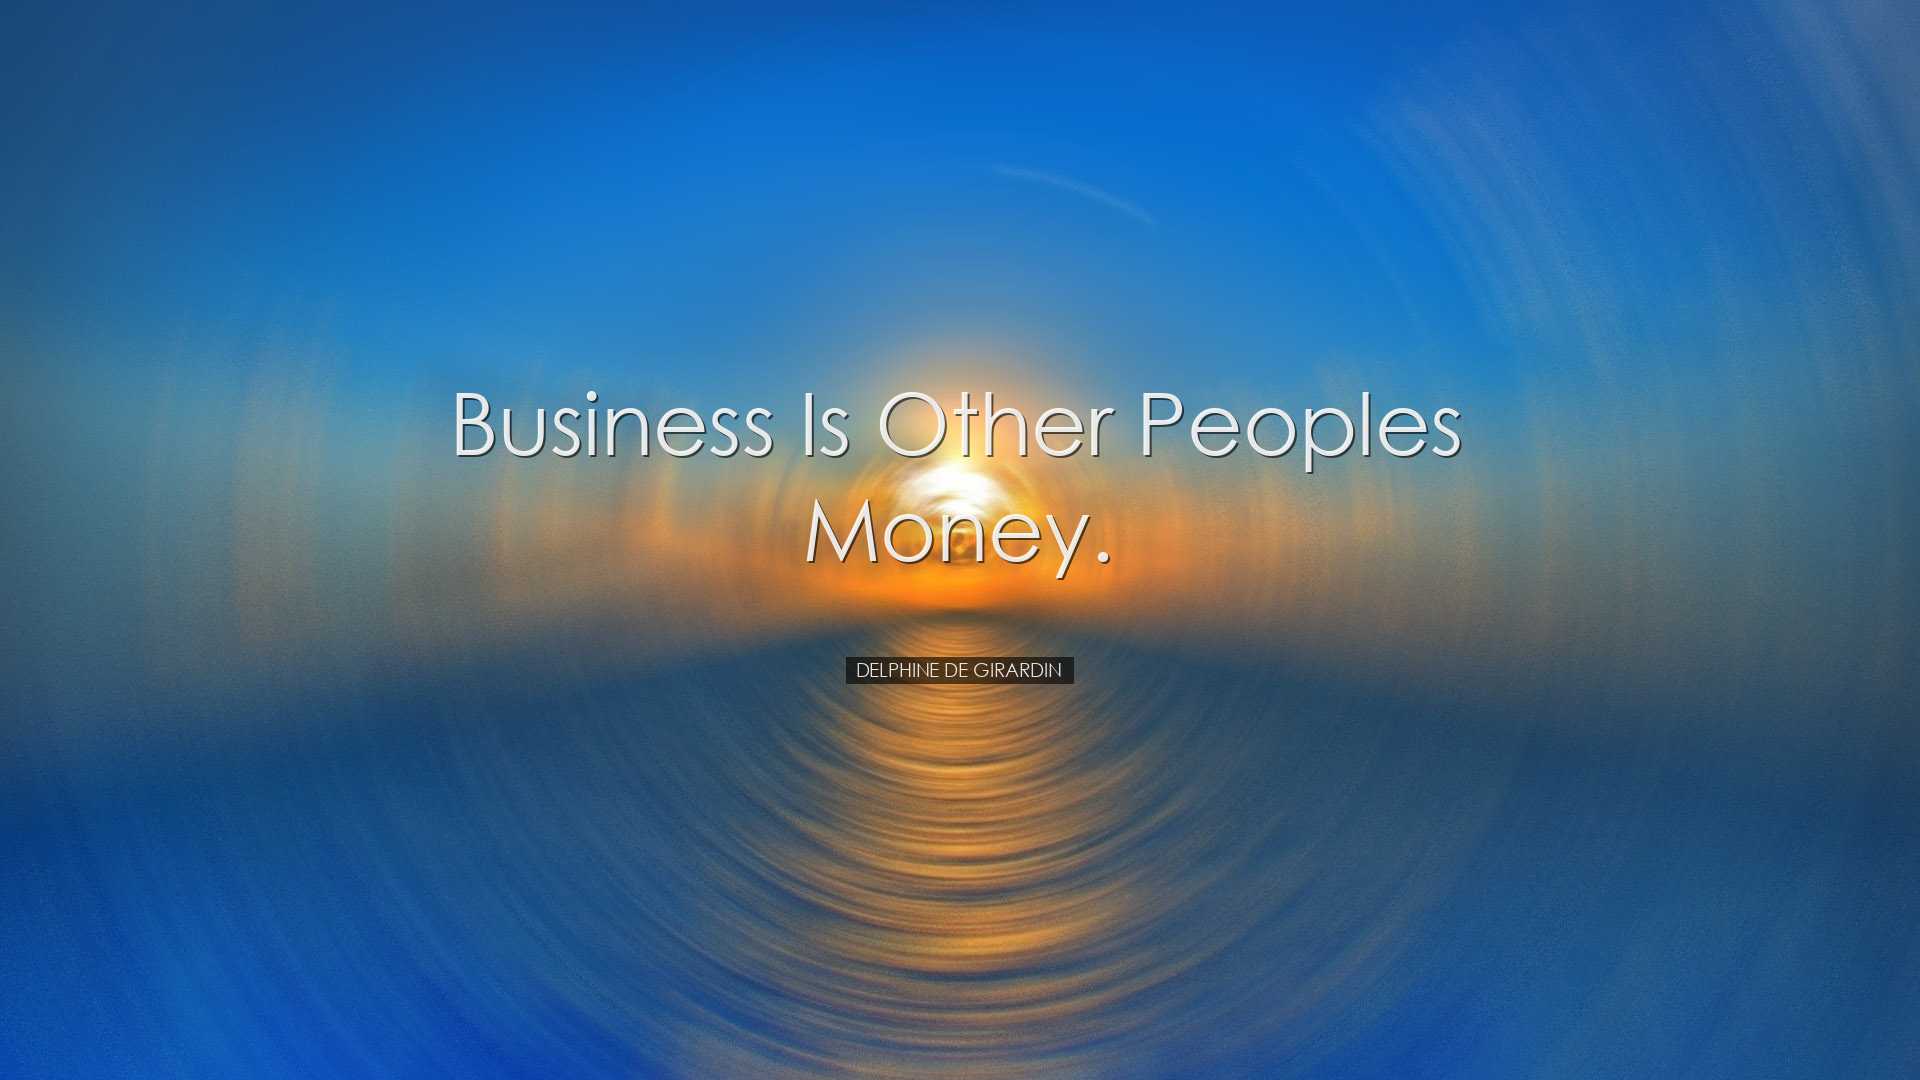 Business is other peoples money. - Delphine de Girardin